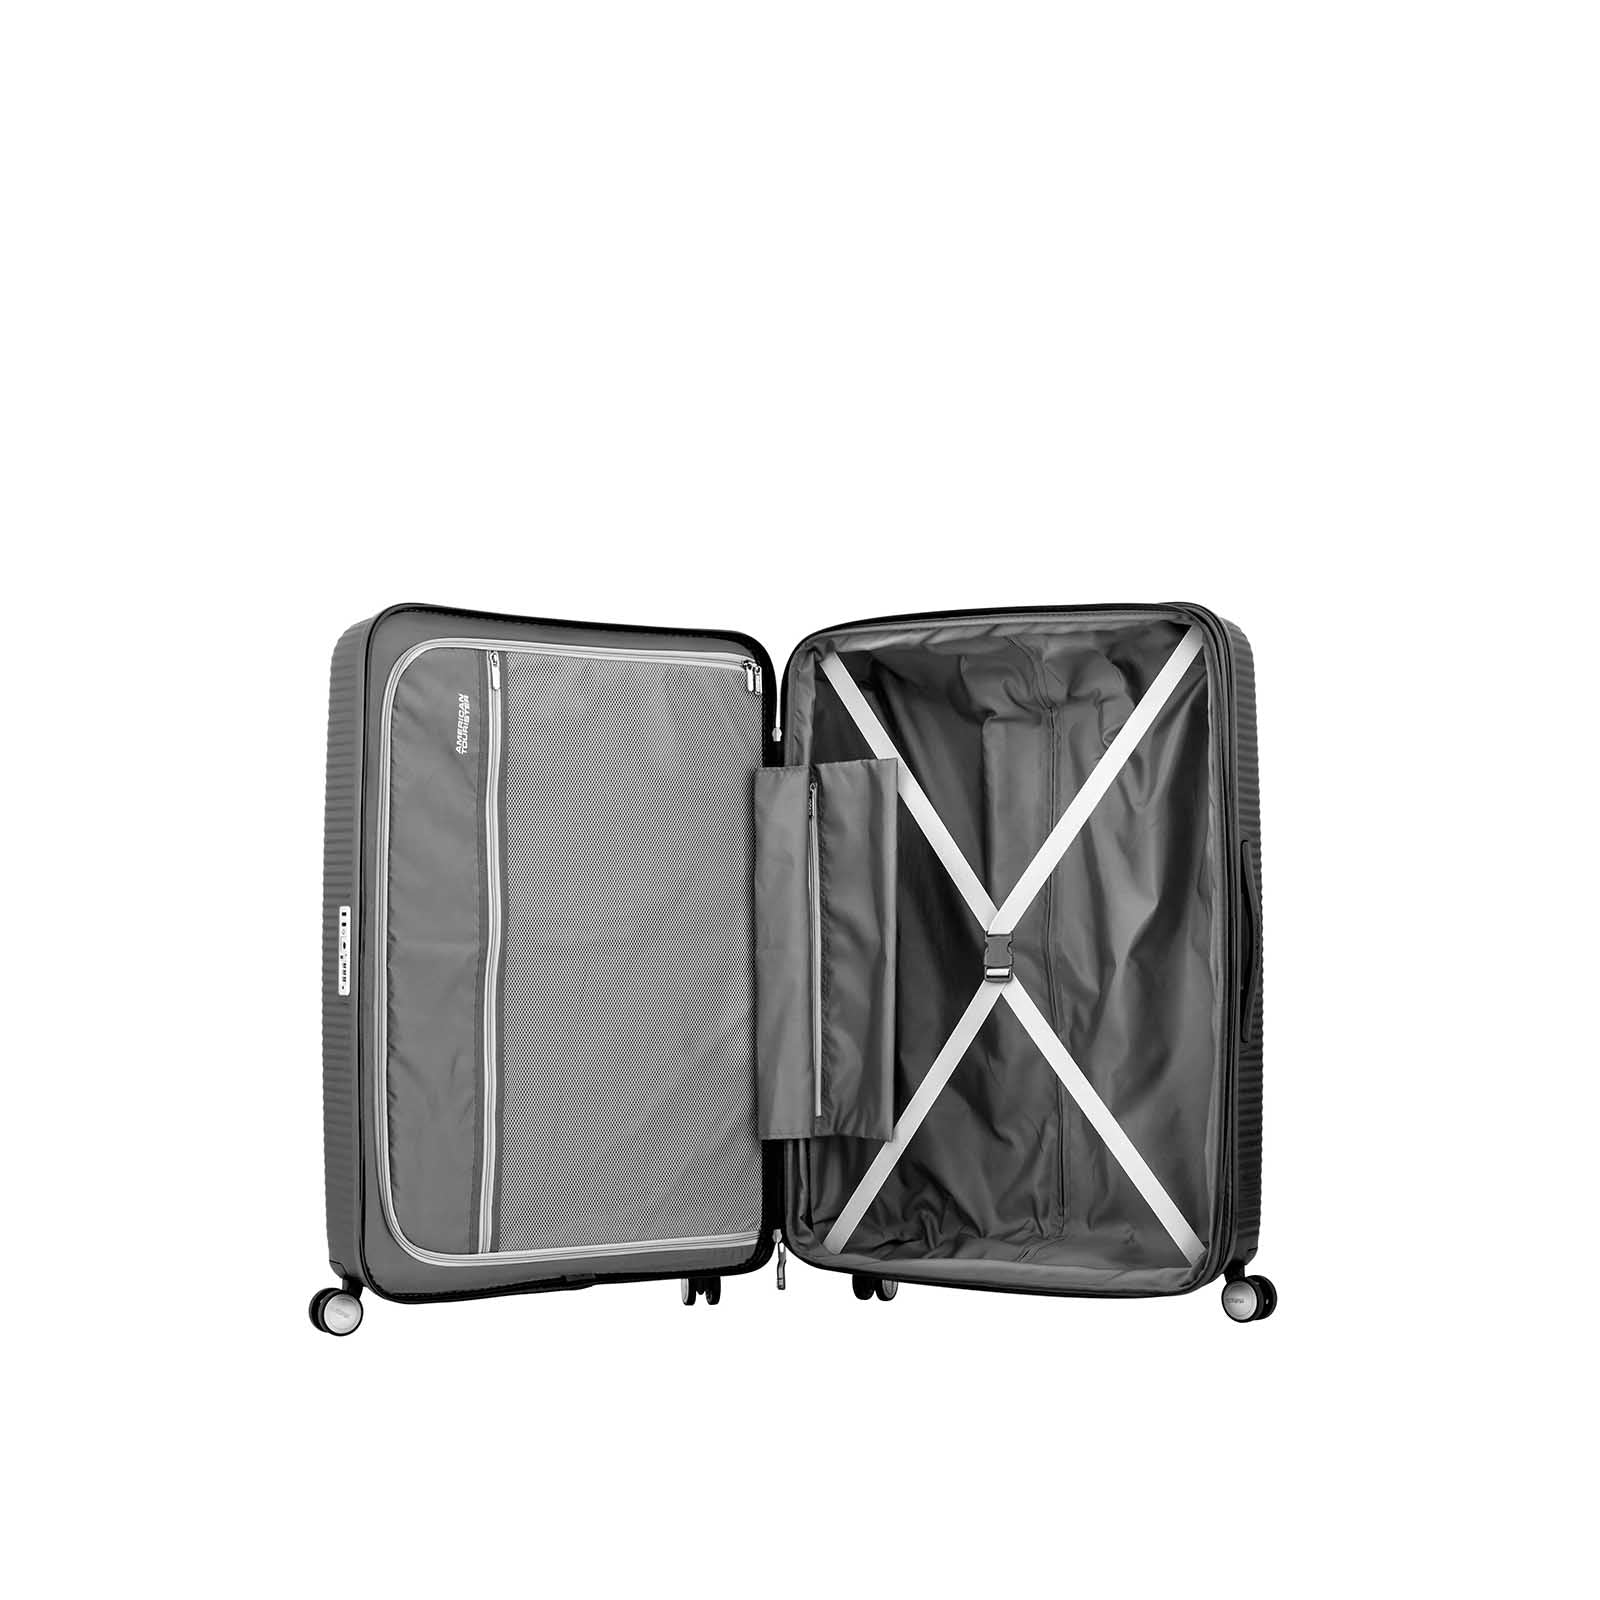 American-Tourister-Curio-2-69cm-Suitcase-Black-Open